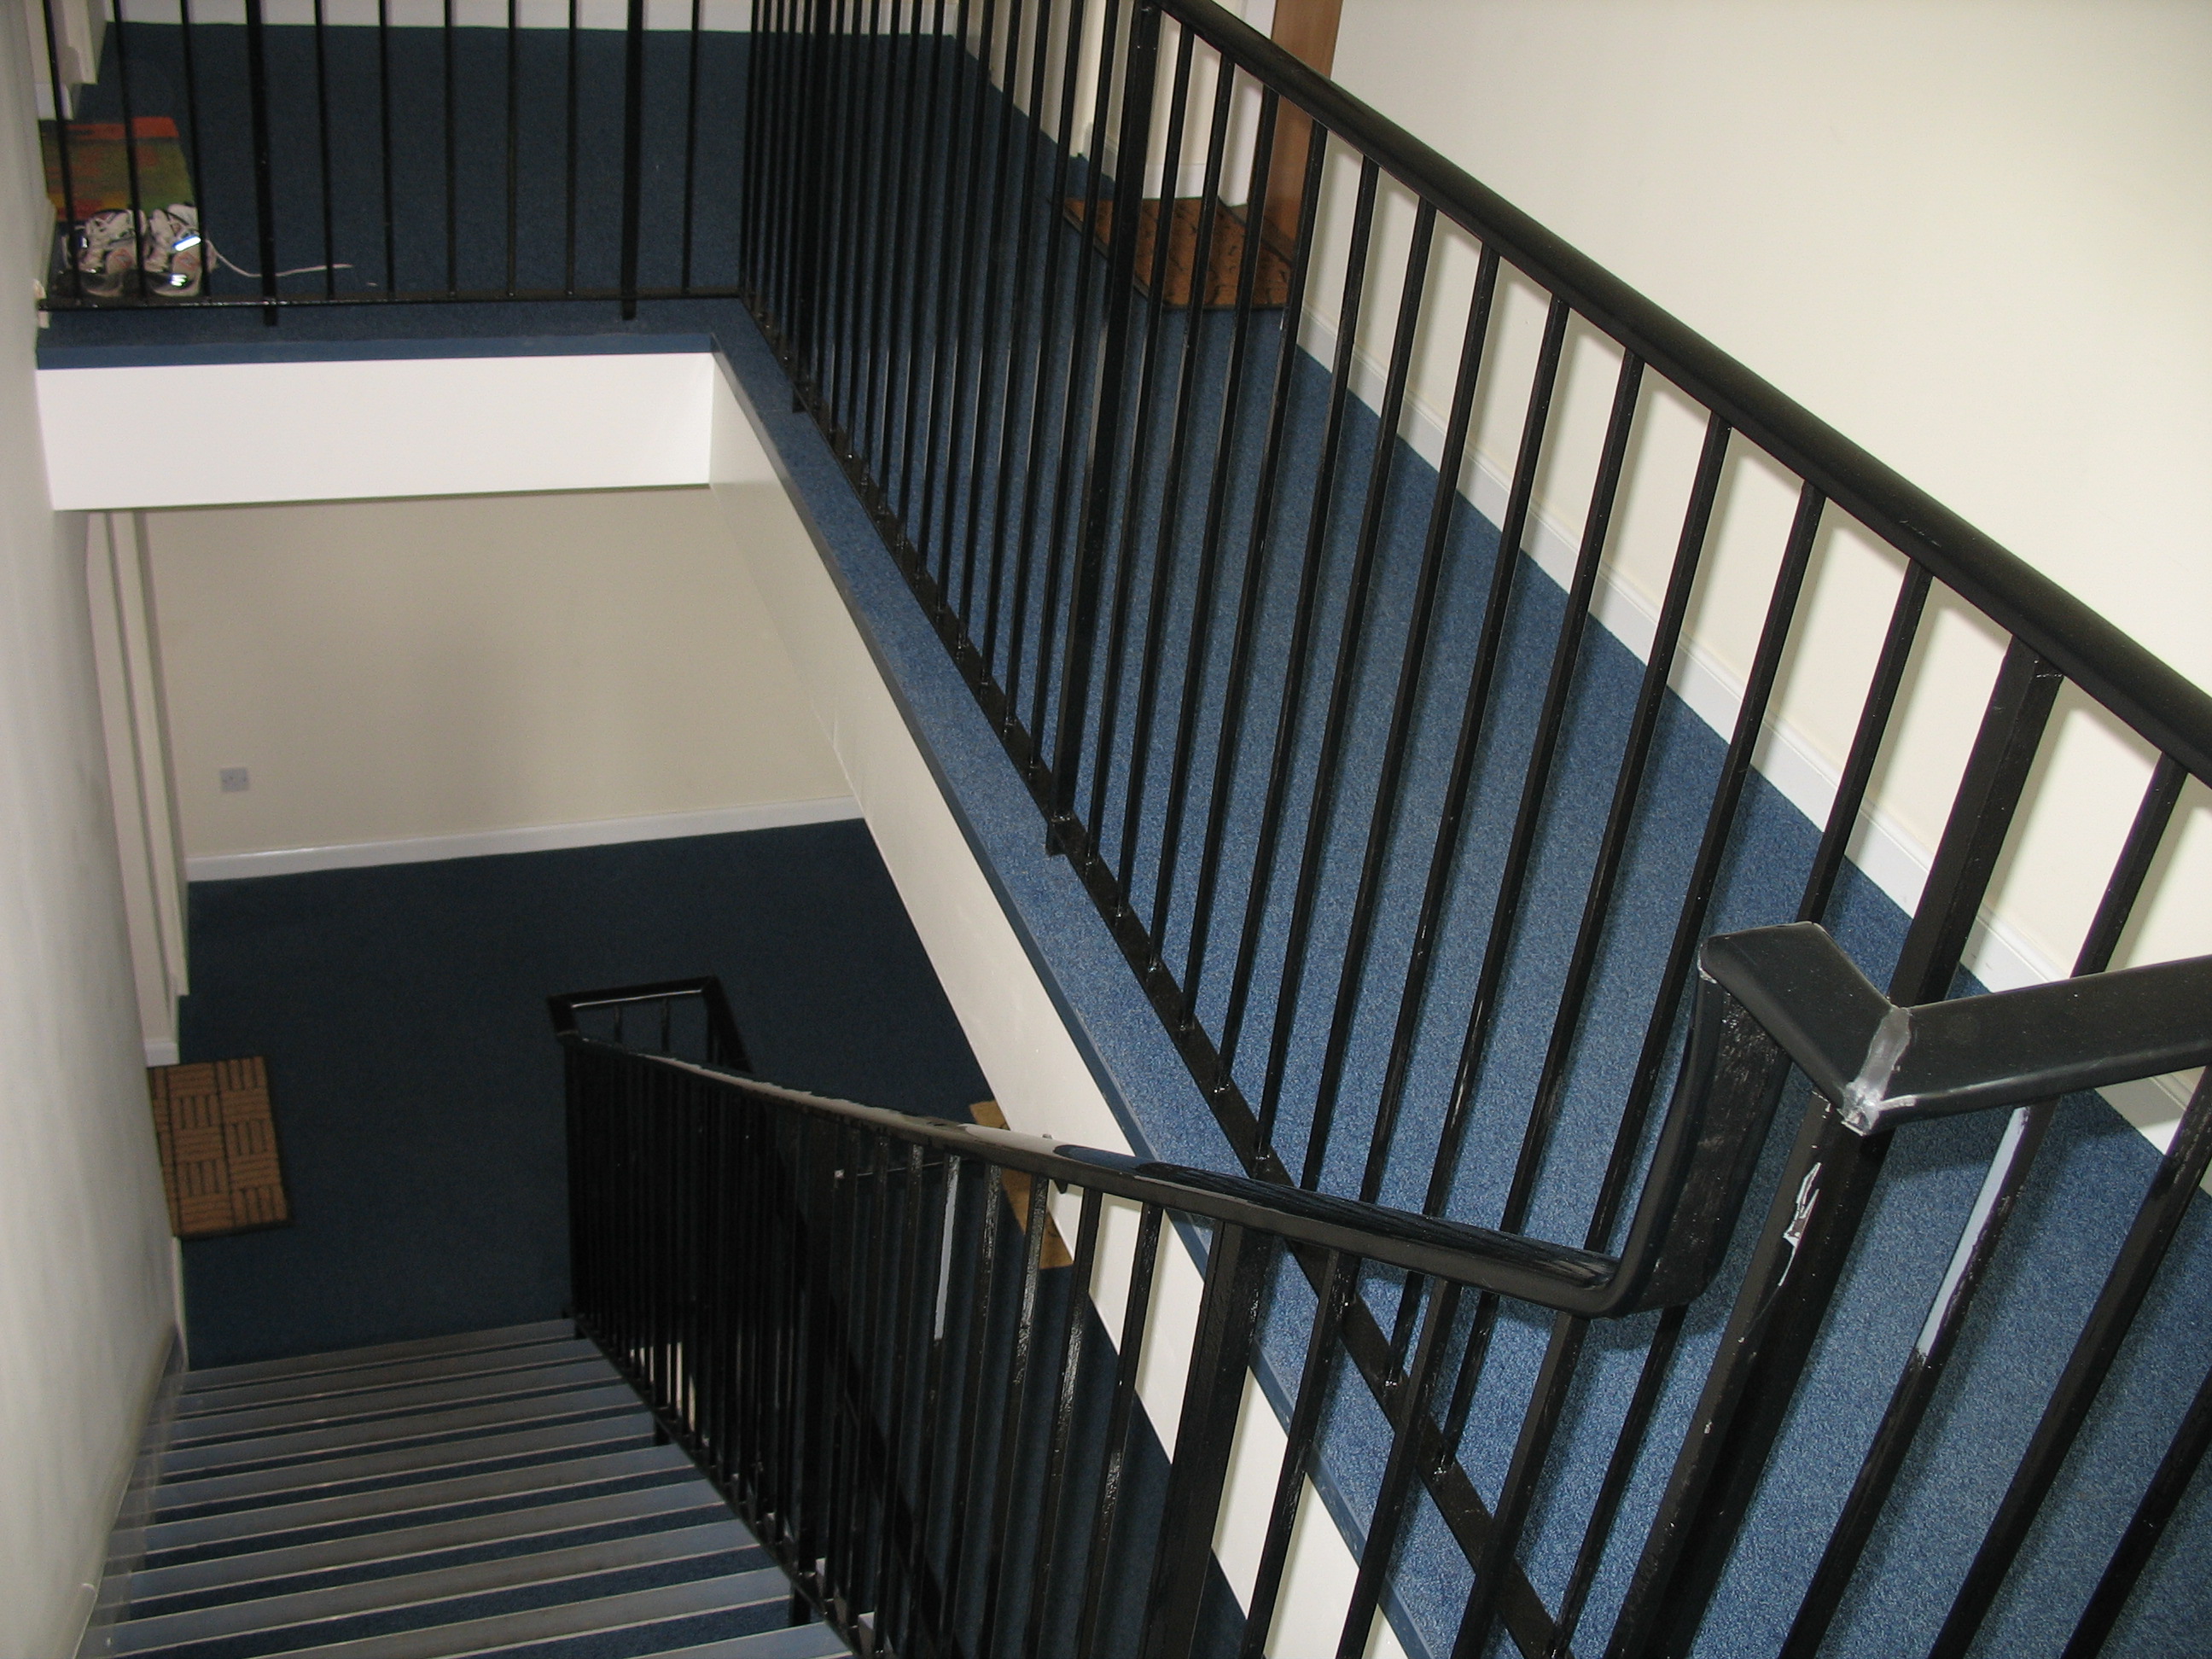 carpet tiles on stairwell, Motherwell